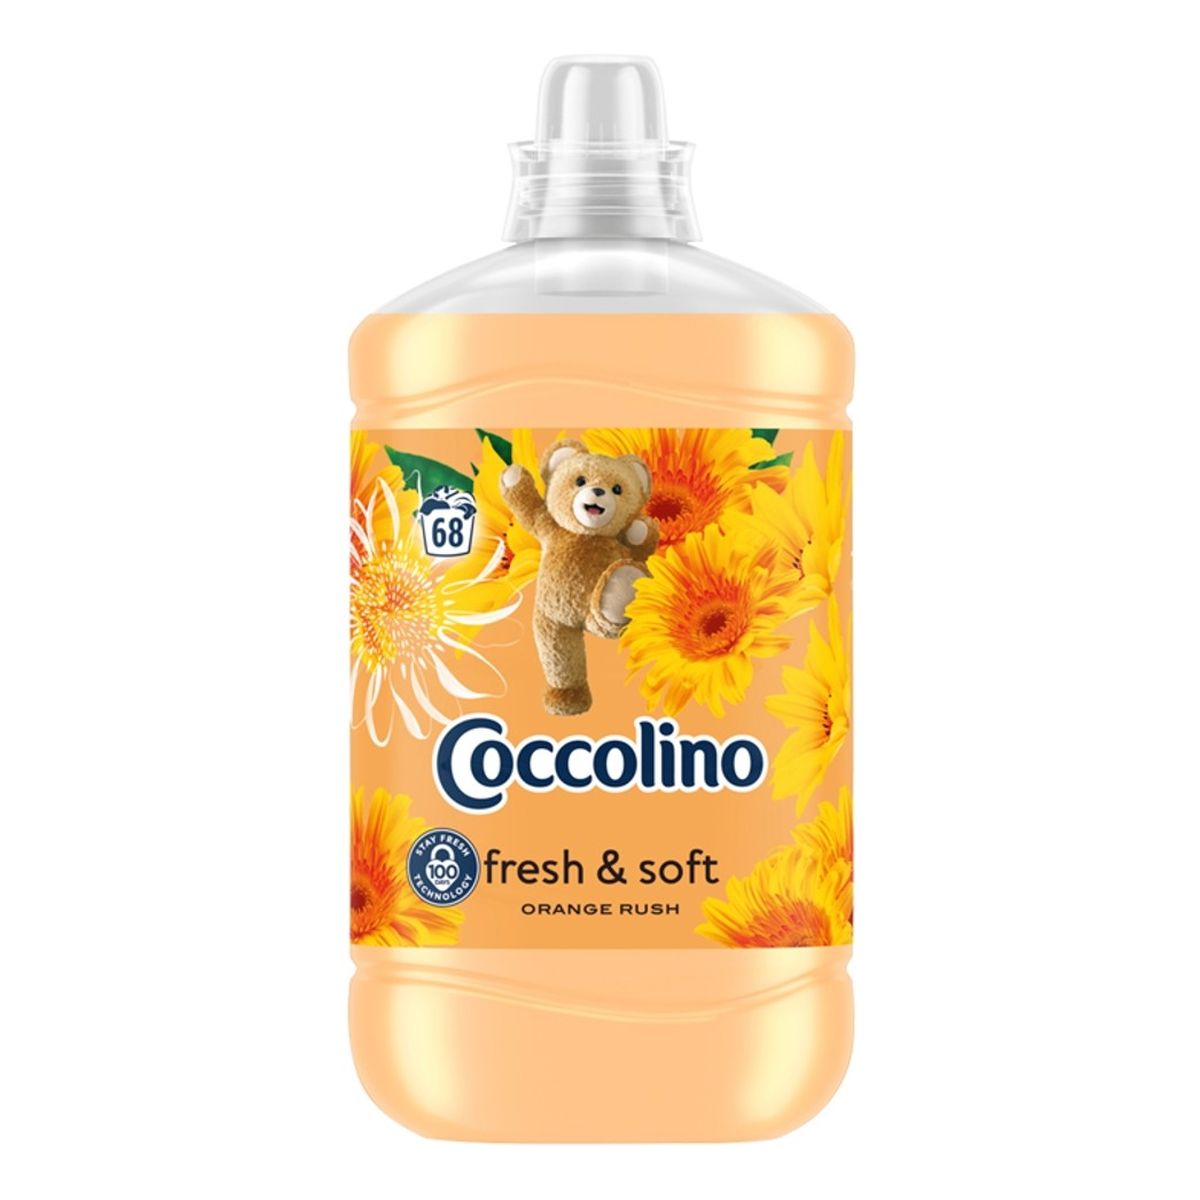 Coccolino Fresh & Soft Płyn do płukania tkanin Orange Rush (68 prań) 1700ml